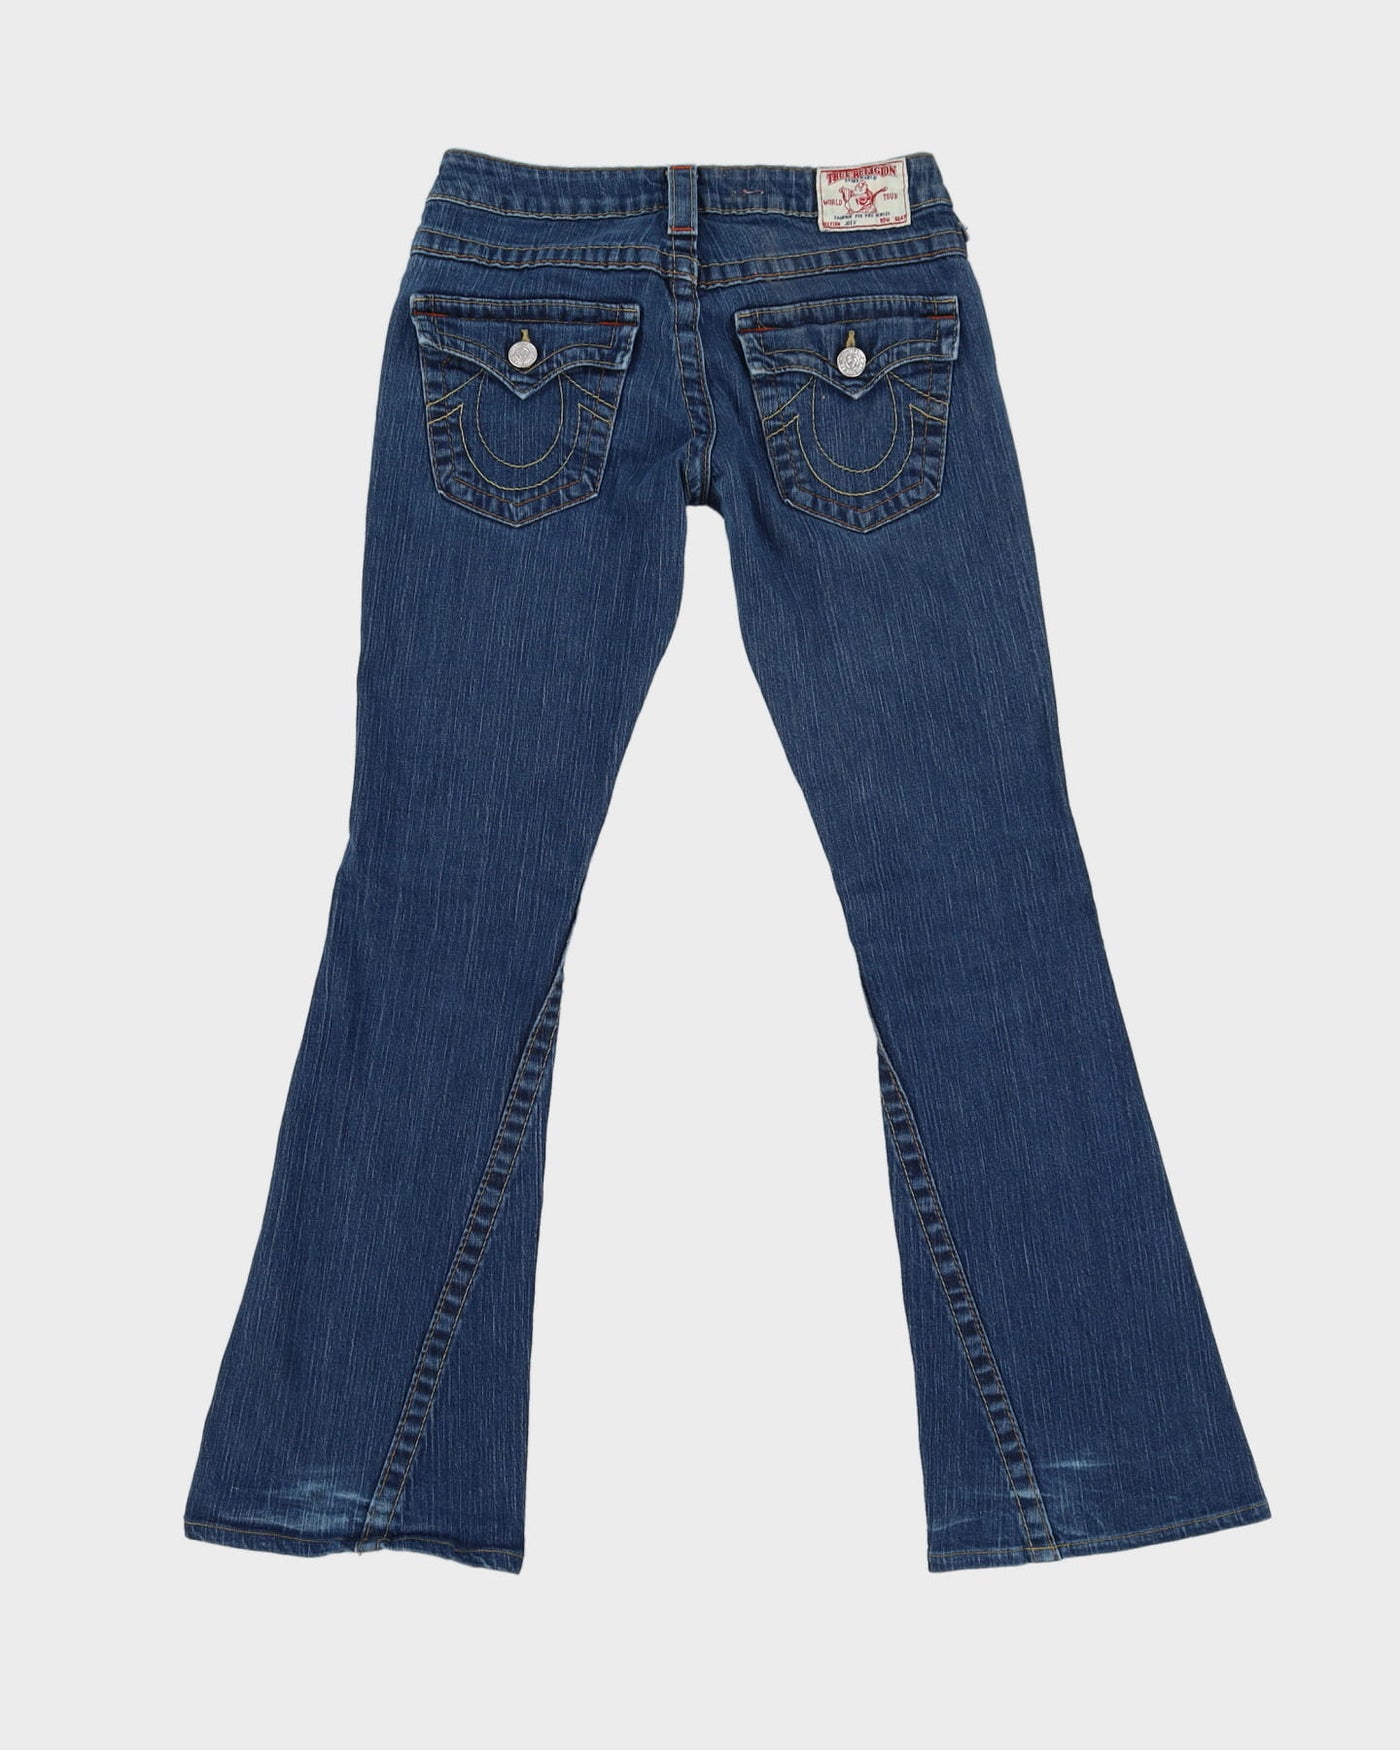 00s Y2K True Religion Blue Jeans - W27 L30